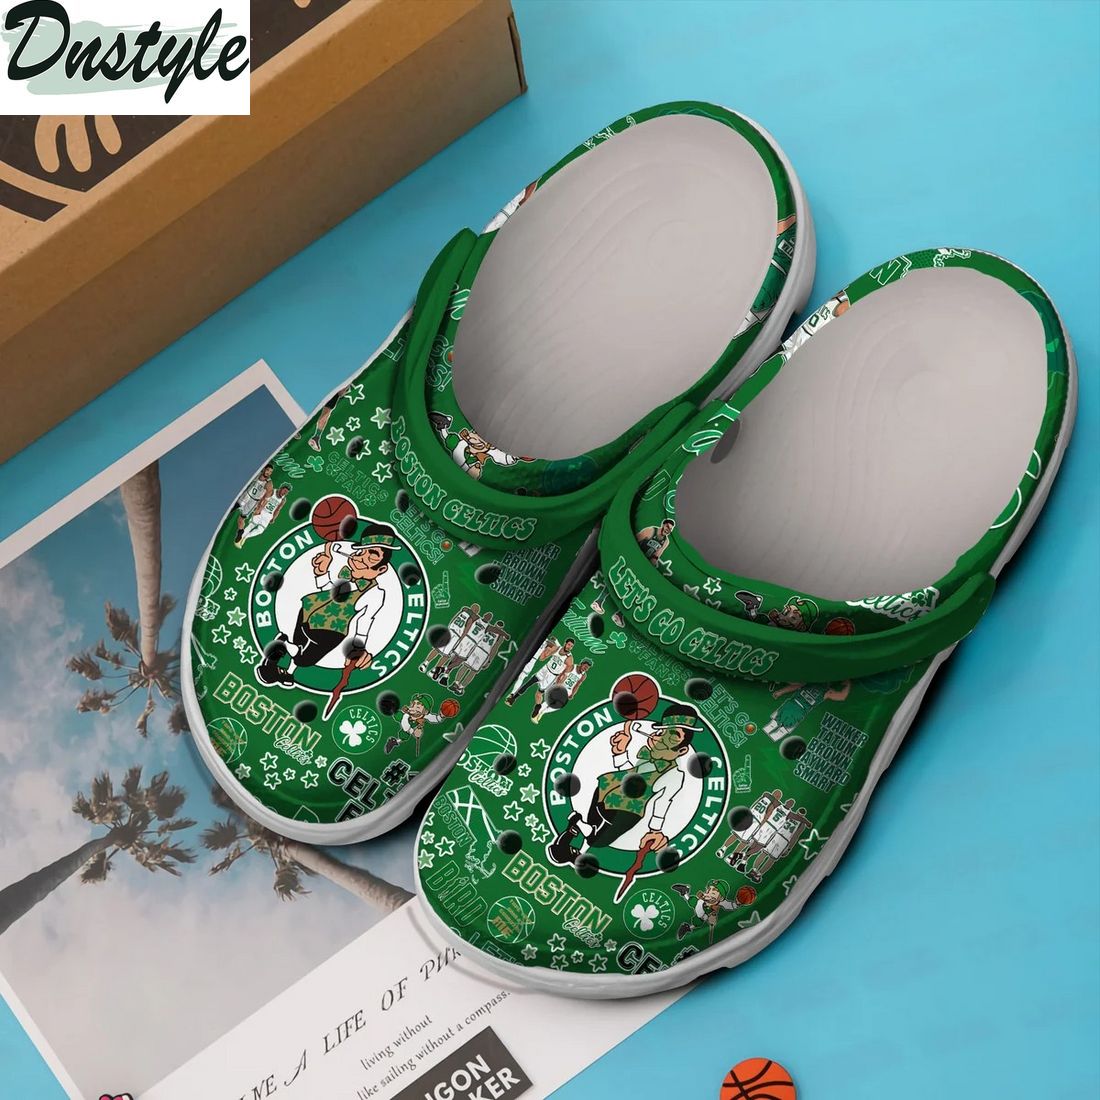 Boston Celtics NBA Crocs Crocband Clogs Shoes